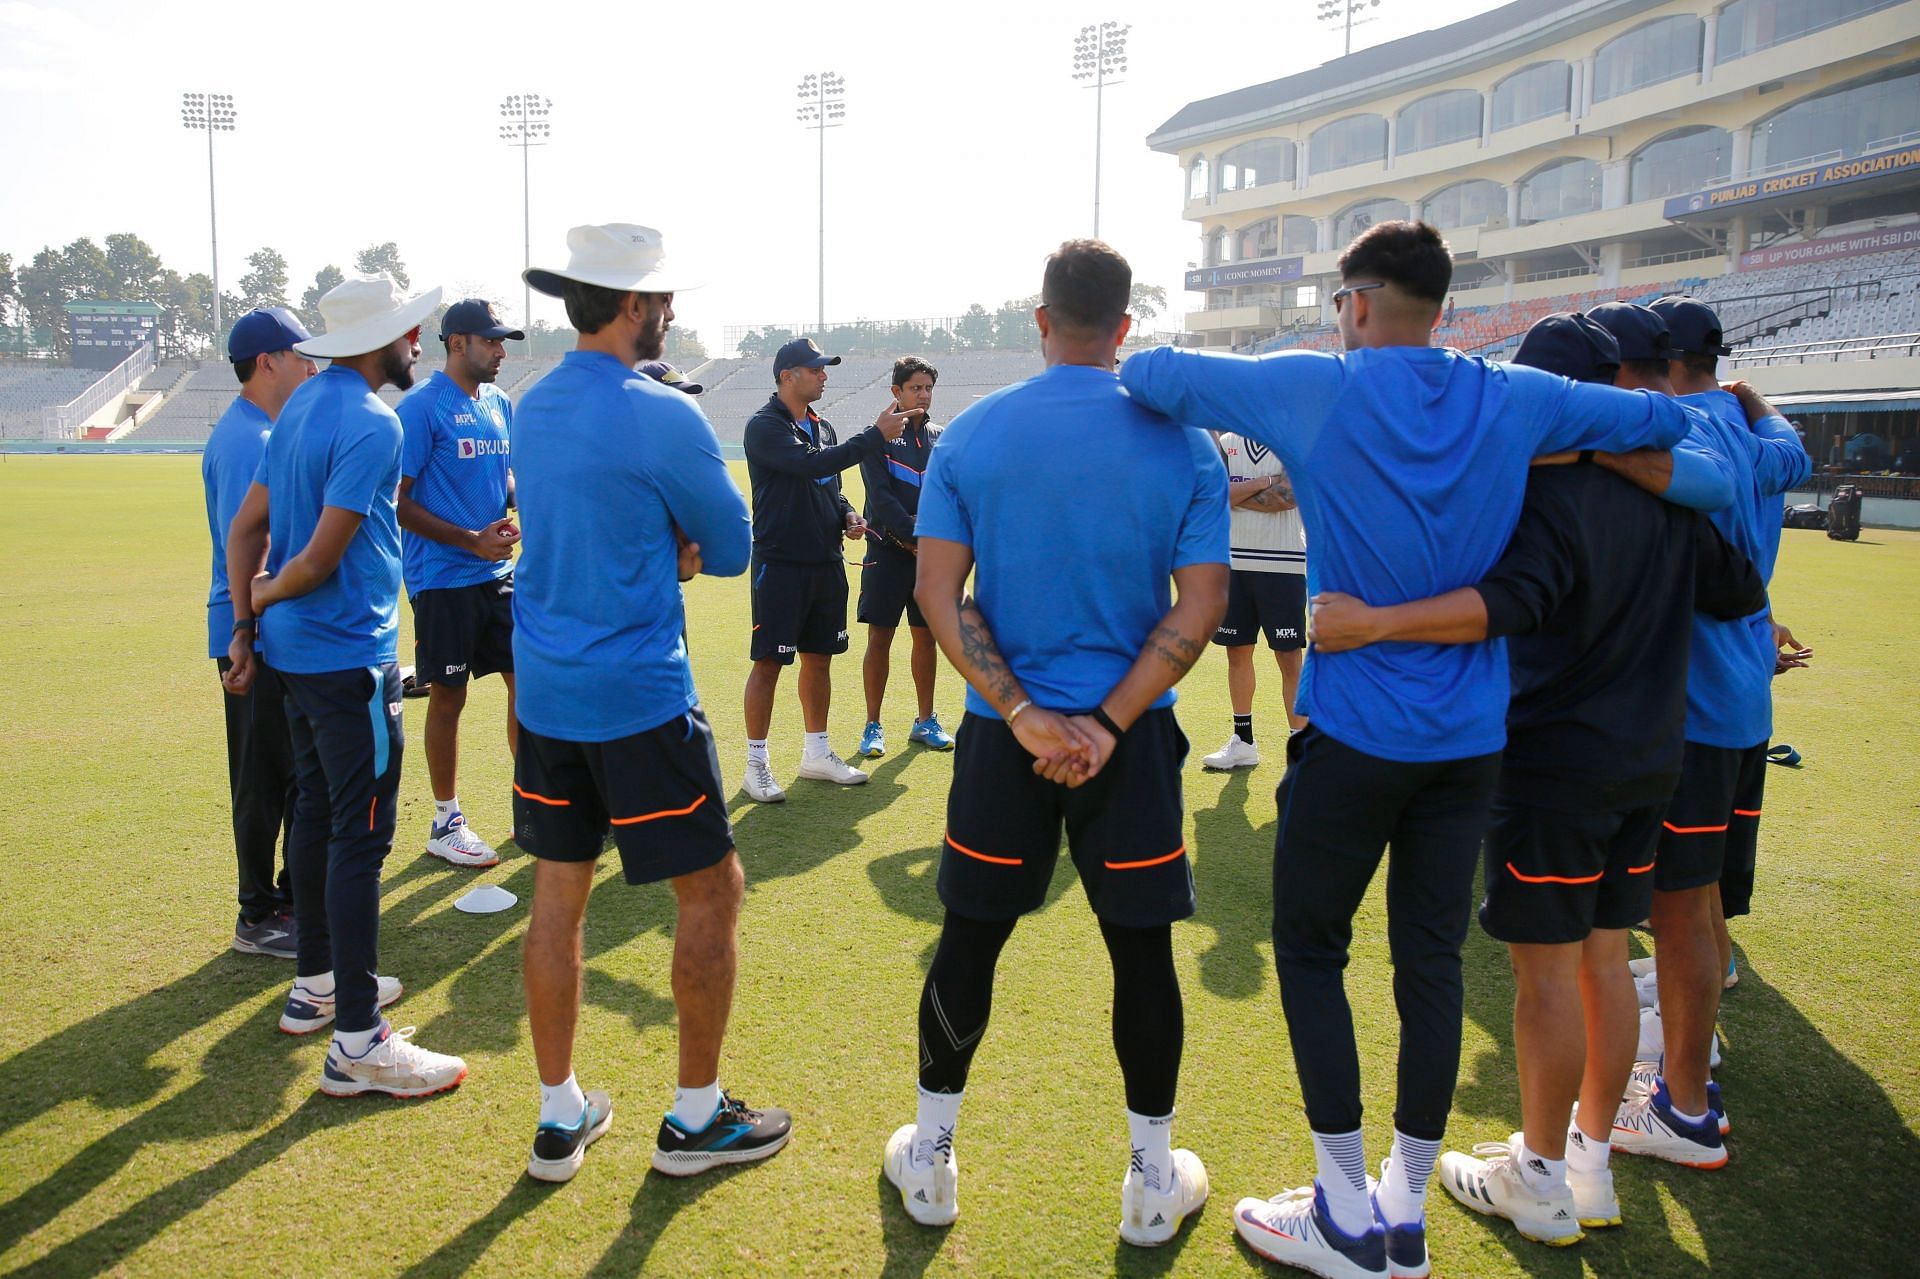 Enter caption Enter caption Enter caption India head coach Rahul Dravid addresses a team huddle in Mohali [Credits: BCCI]